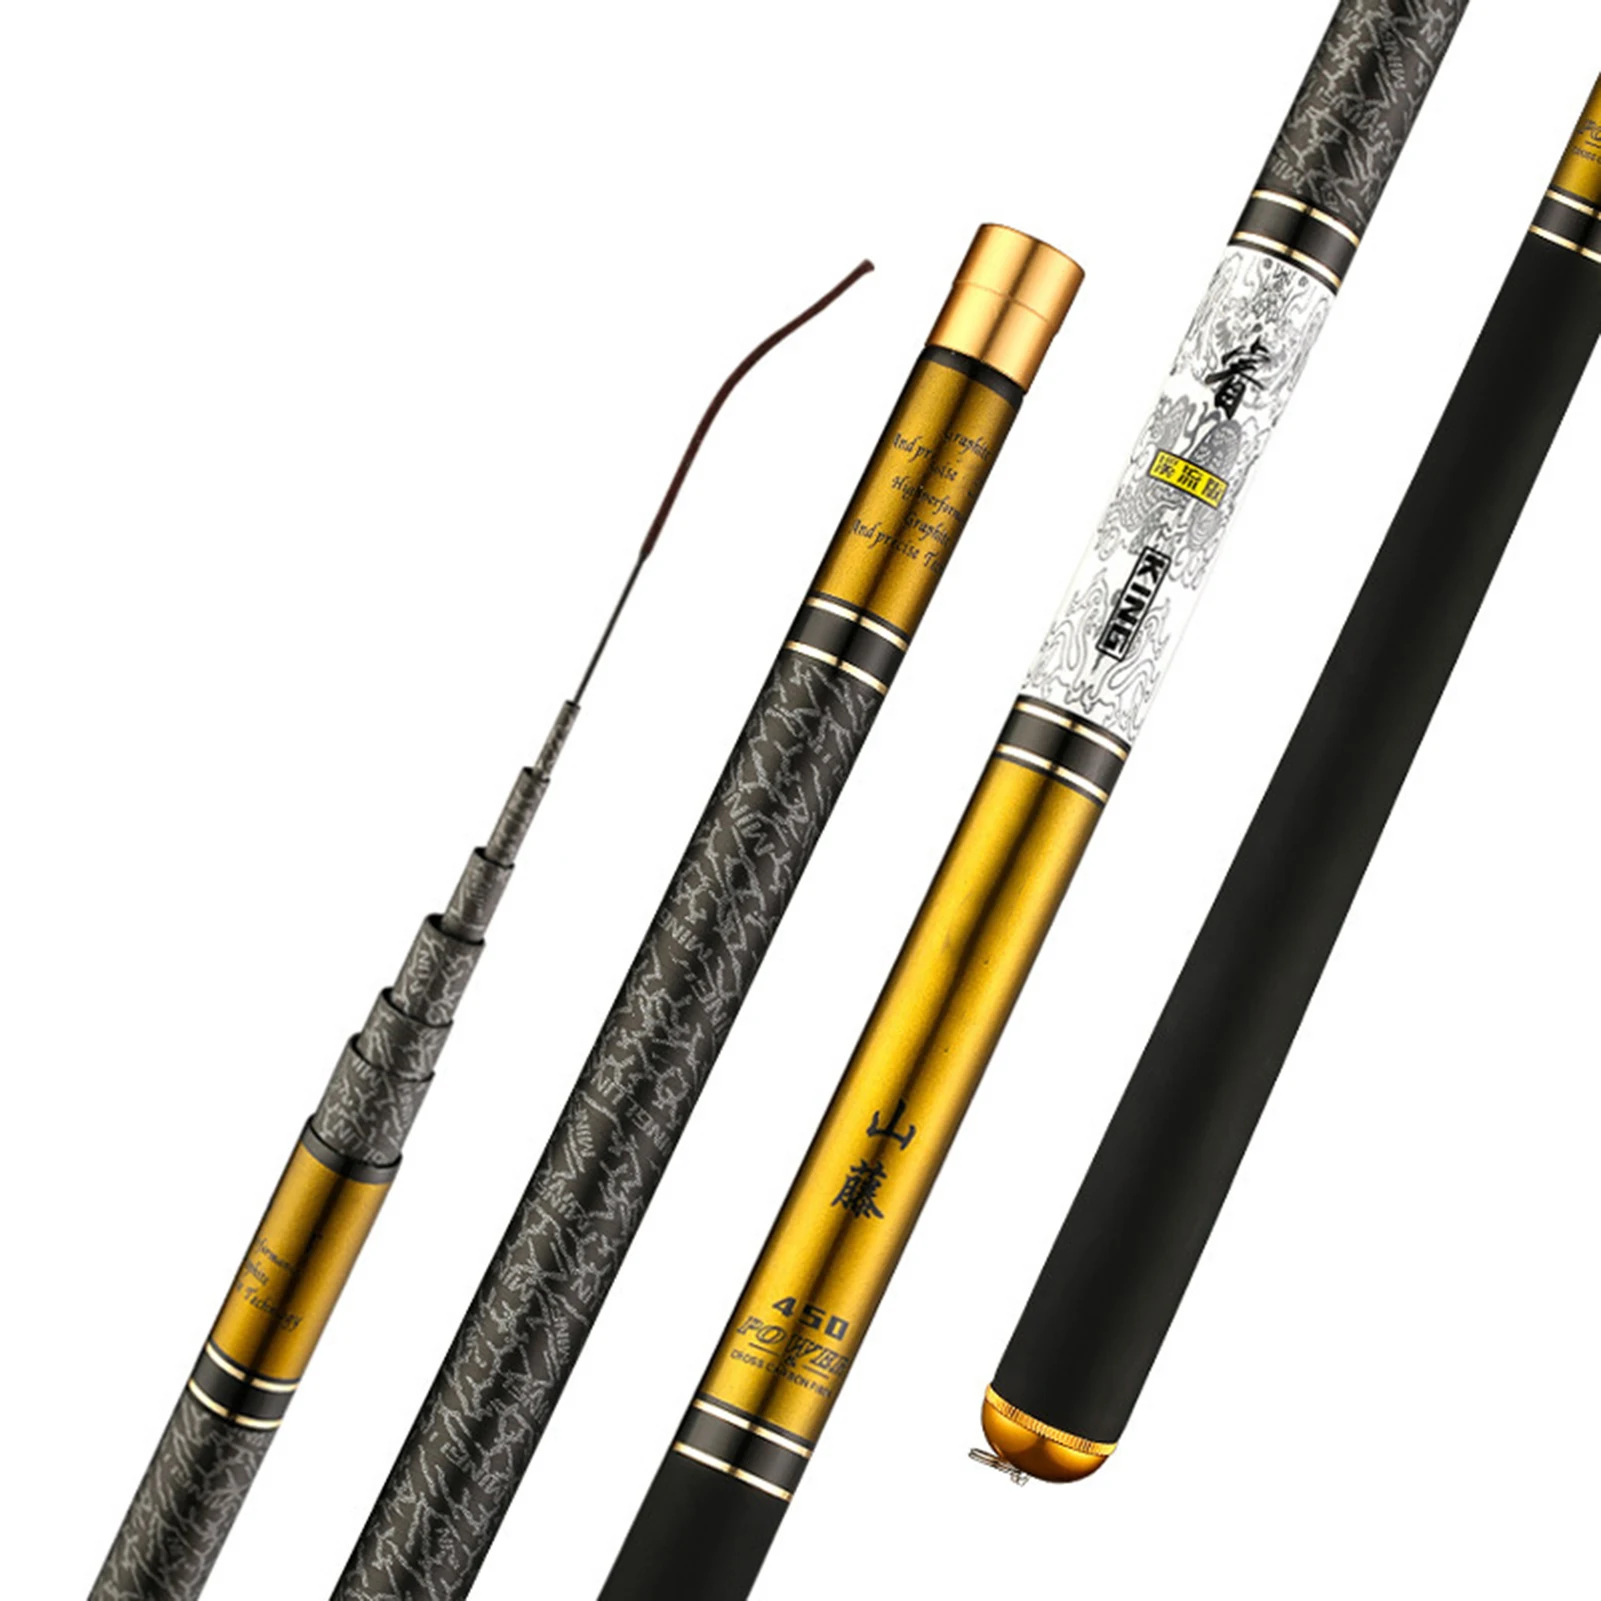 Telescopic Fishing Pole Japanese High Carbon Fishing Rod 3.6/4.5/5.4/6.3/7.2m Short Handheld 28 Tonality Travel Sea Pole